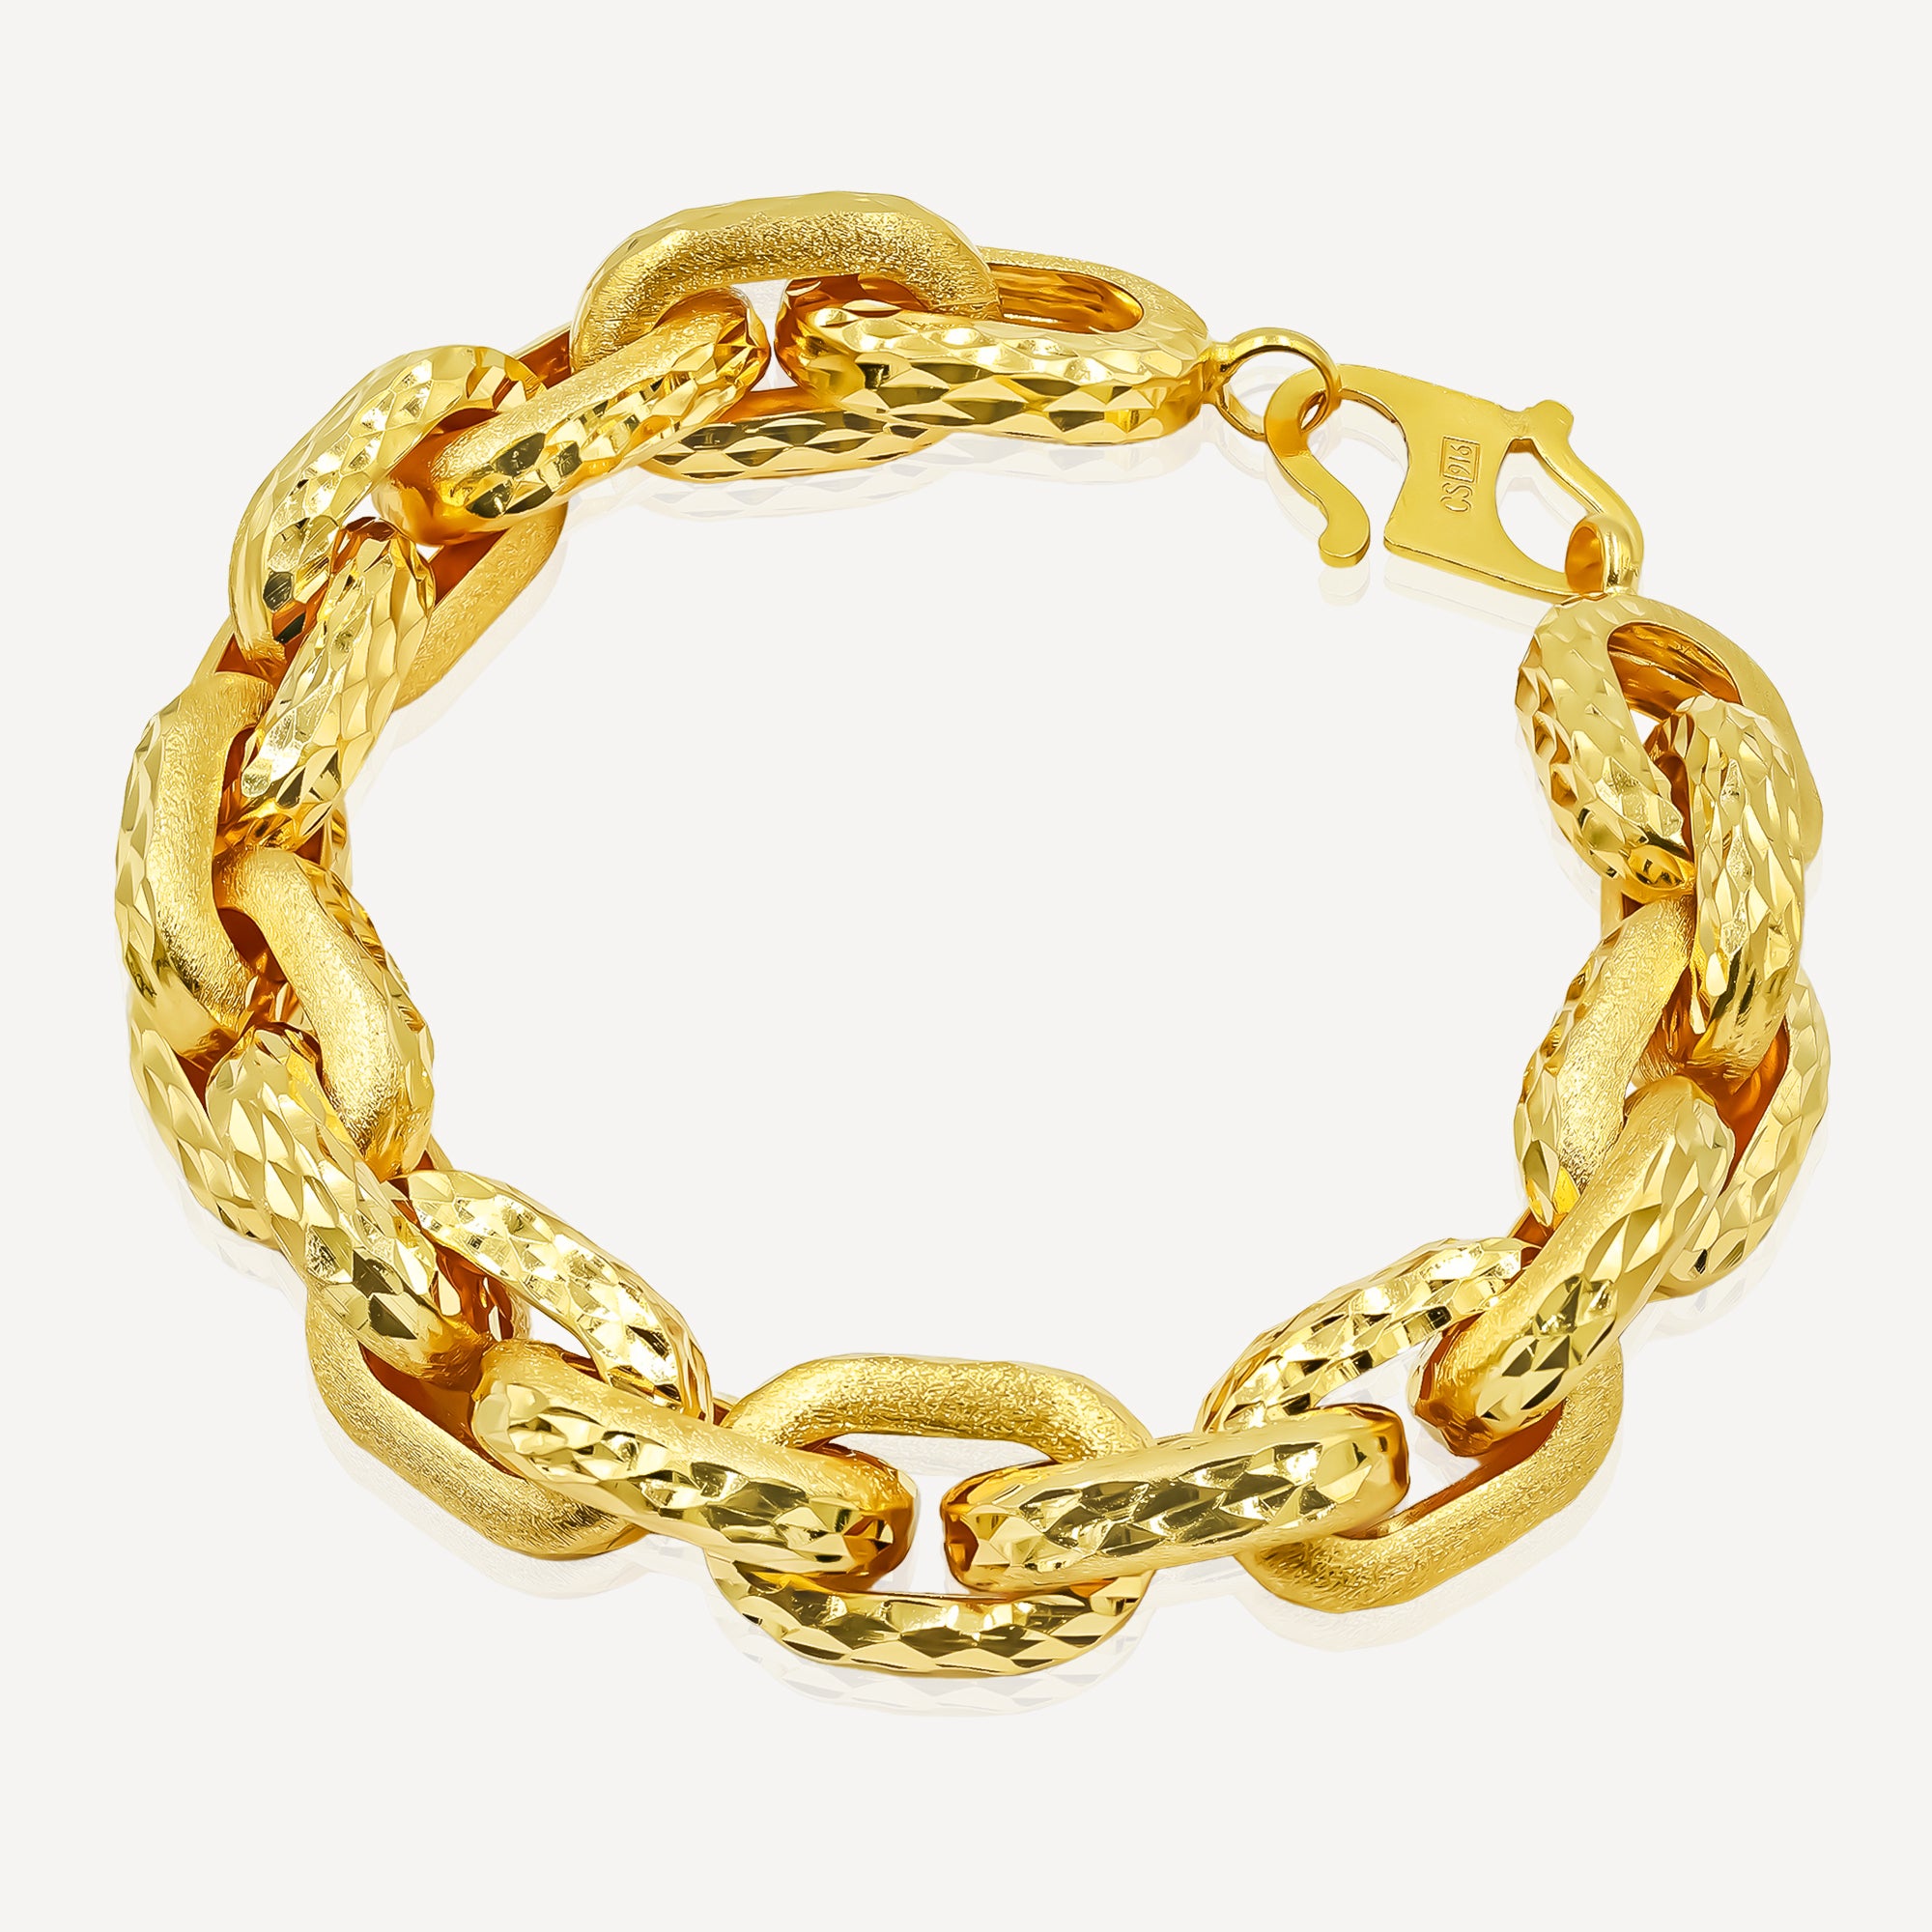 Buy 22k 916 Gold Baby Double Coco Bracelet 12mm / S130 Online in India -  Etsy